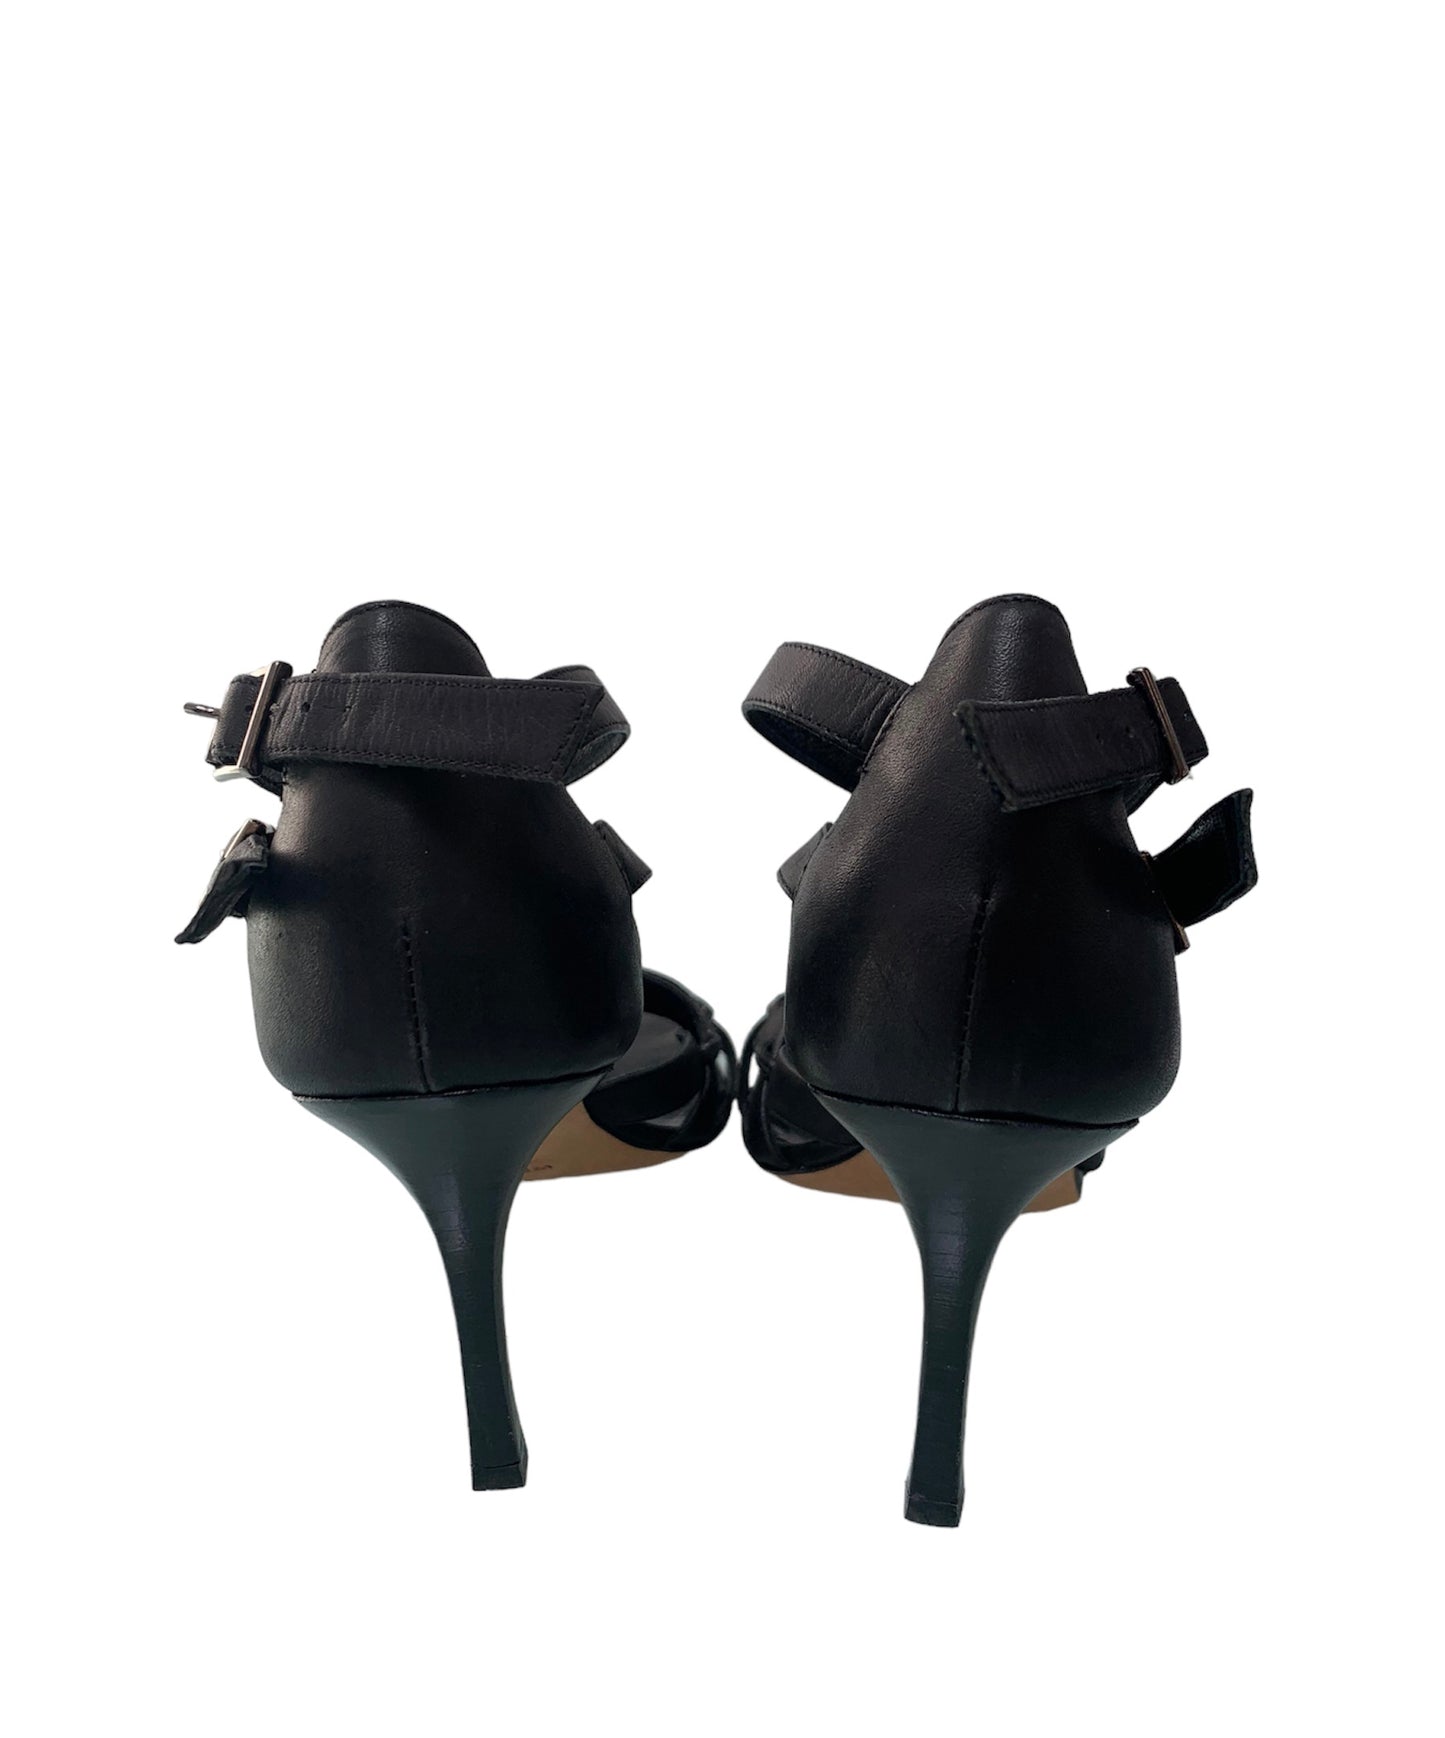 Load image into Gallery viewer, Manolo Blahnik Double Buckle Black Leather Heels
